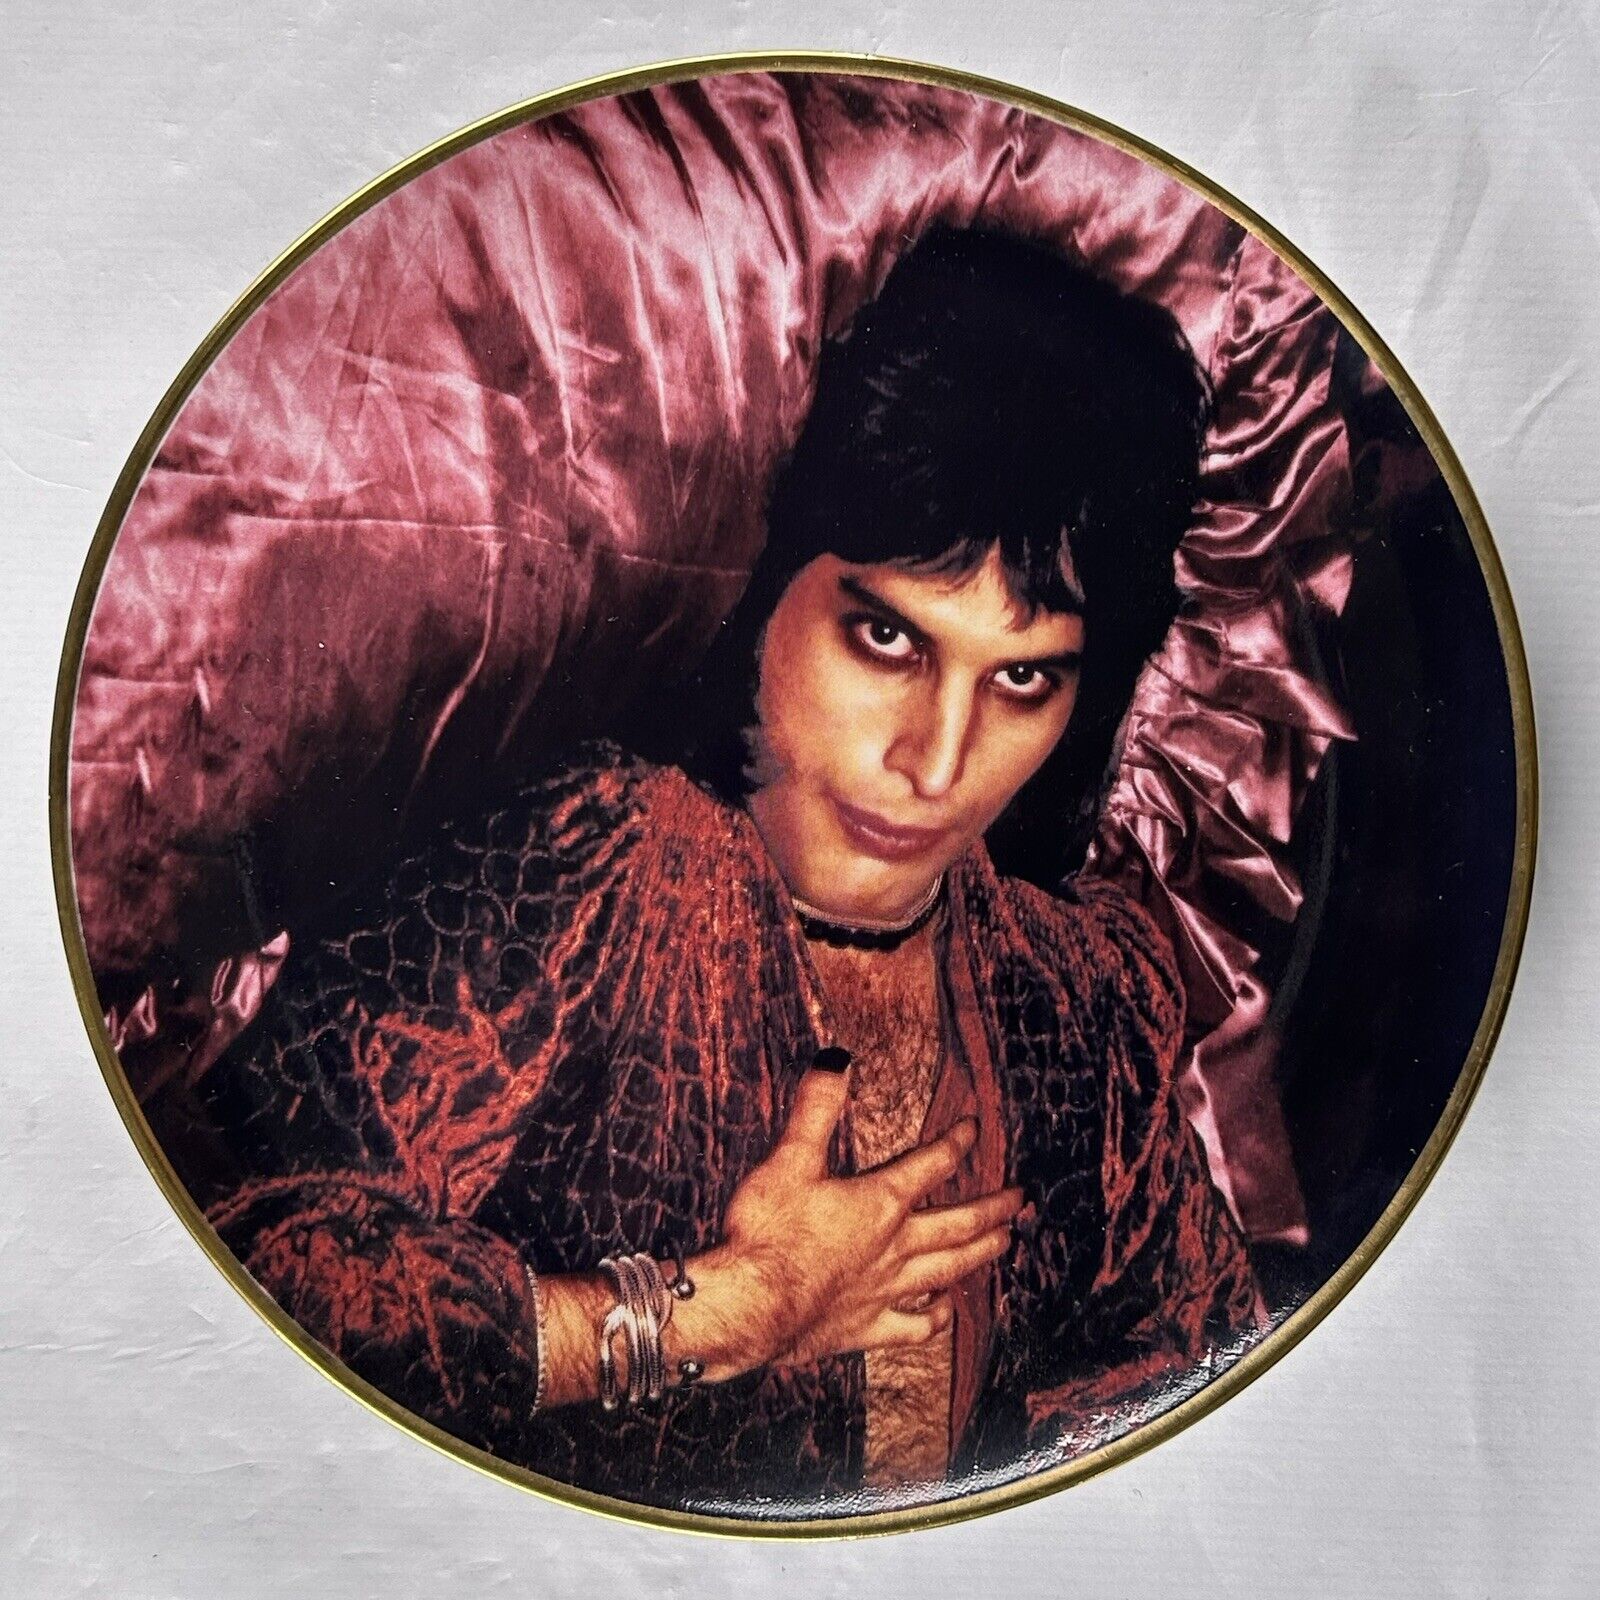 Freddie Mercury Mick Rock Danbury Mint Plate Ltd Ed Original Box Killer Queen